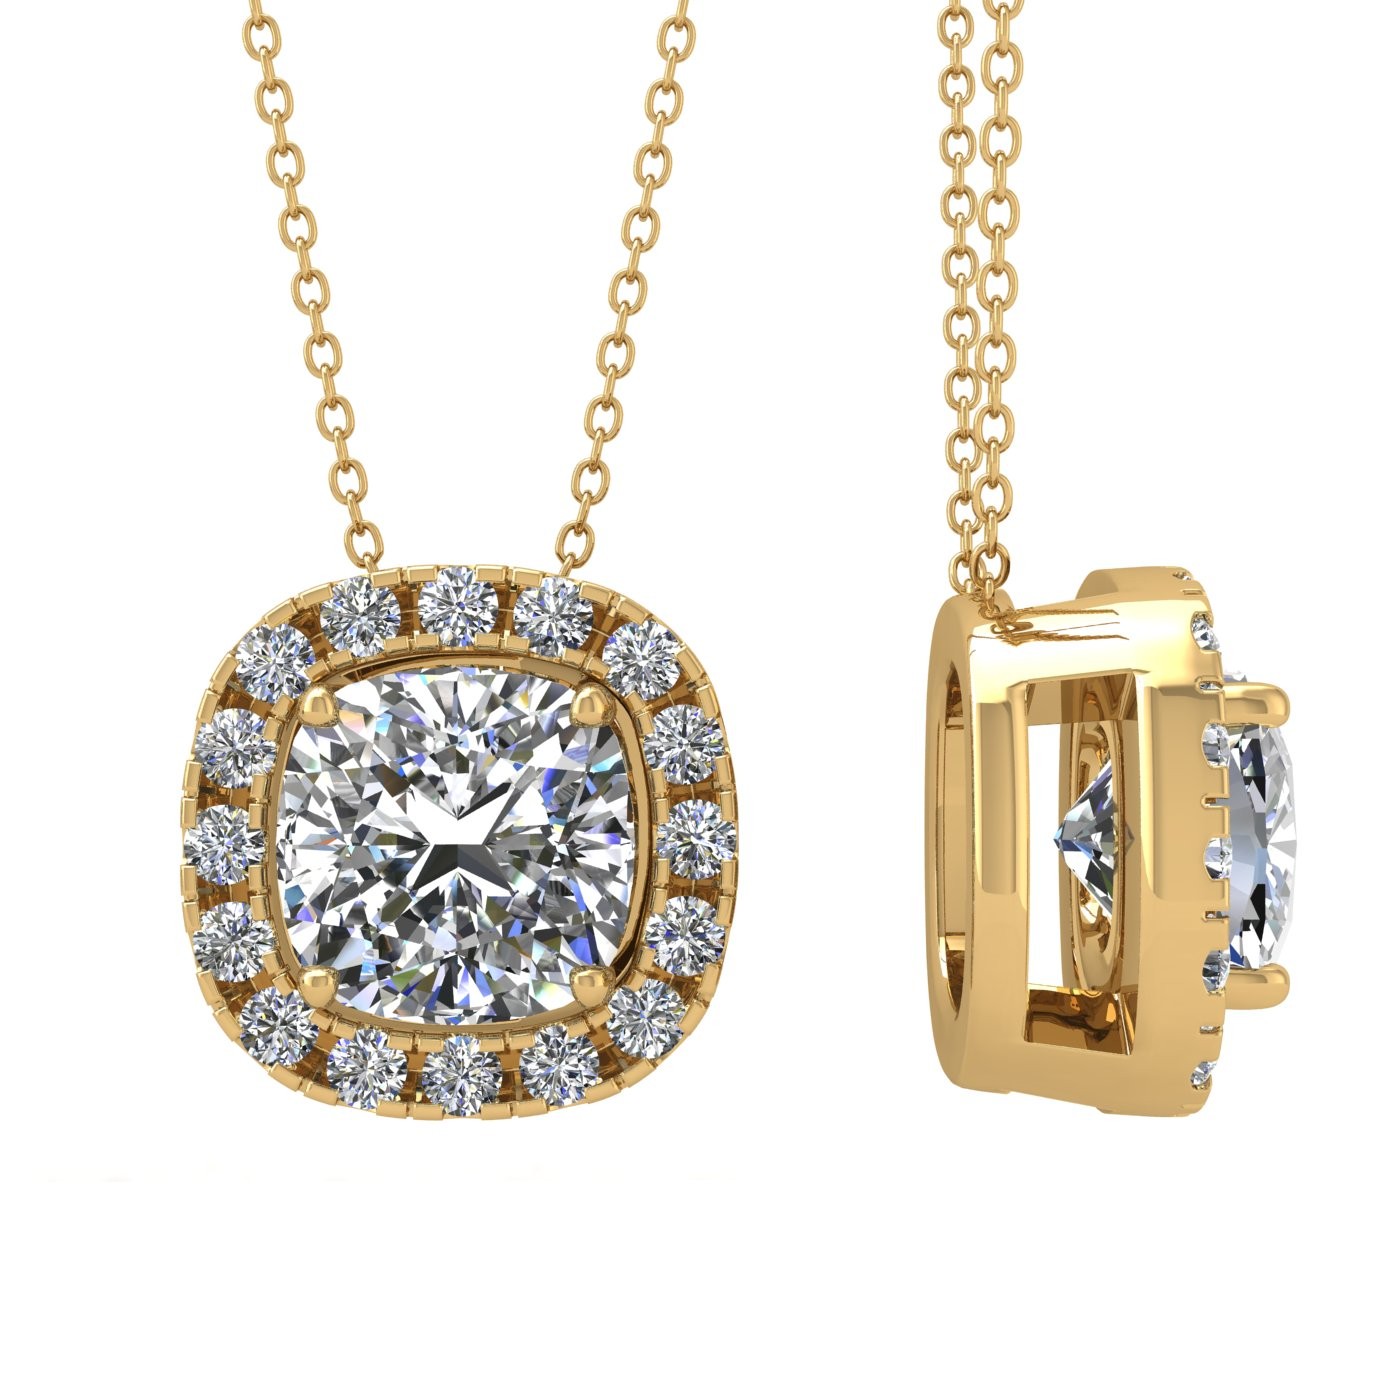 18k white gold 2,5 ct 4 prongs cushion shape diamond pendant with diamond pavÉ set halo Photos & images